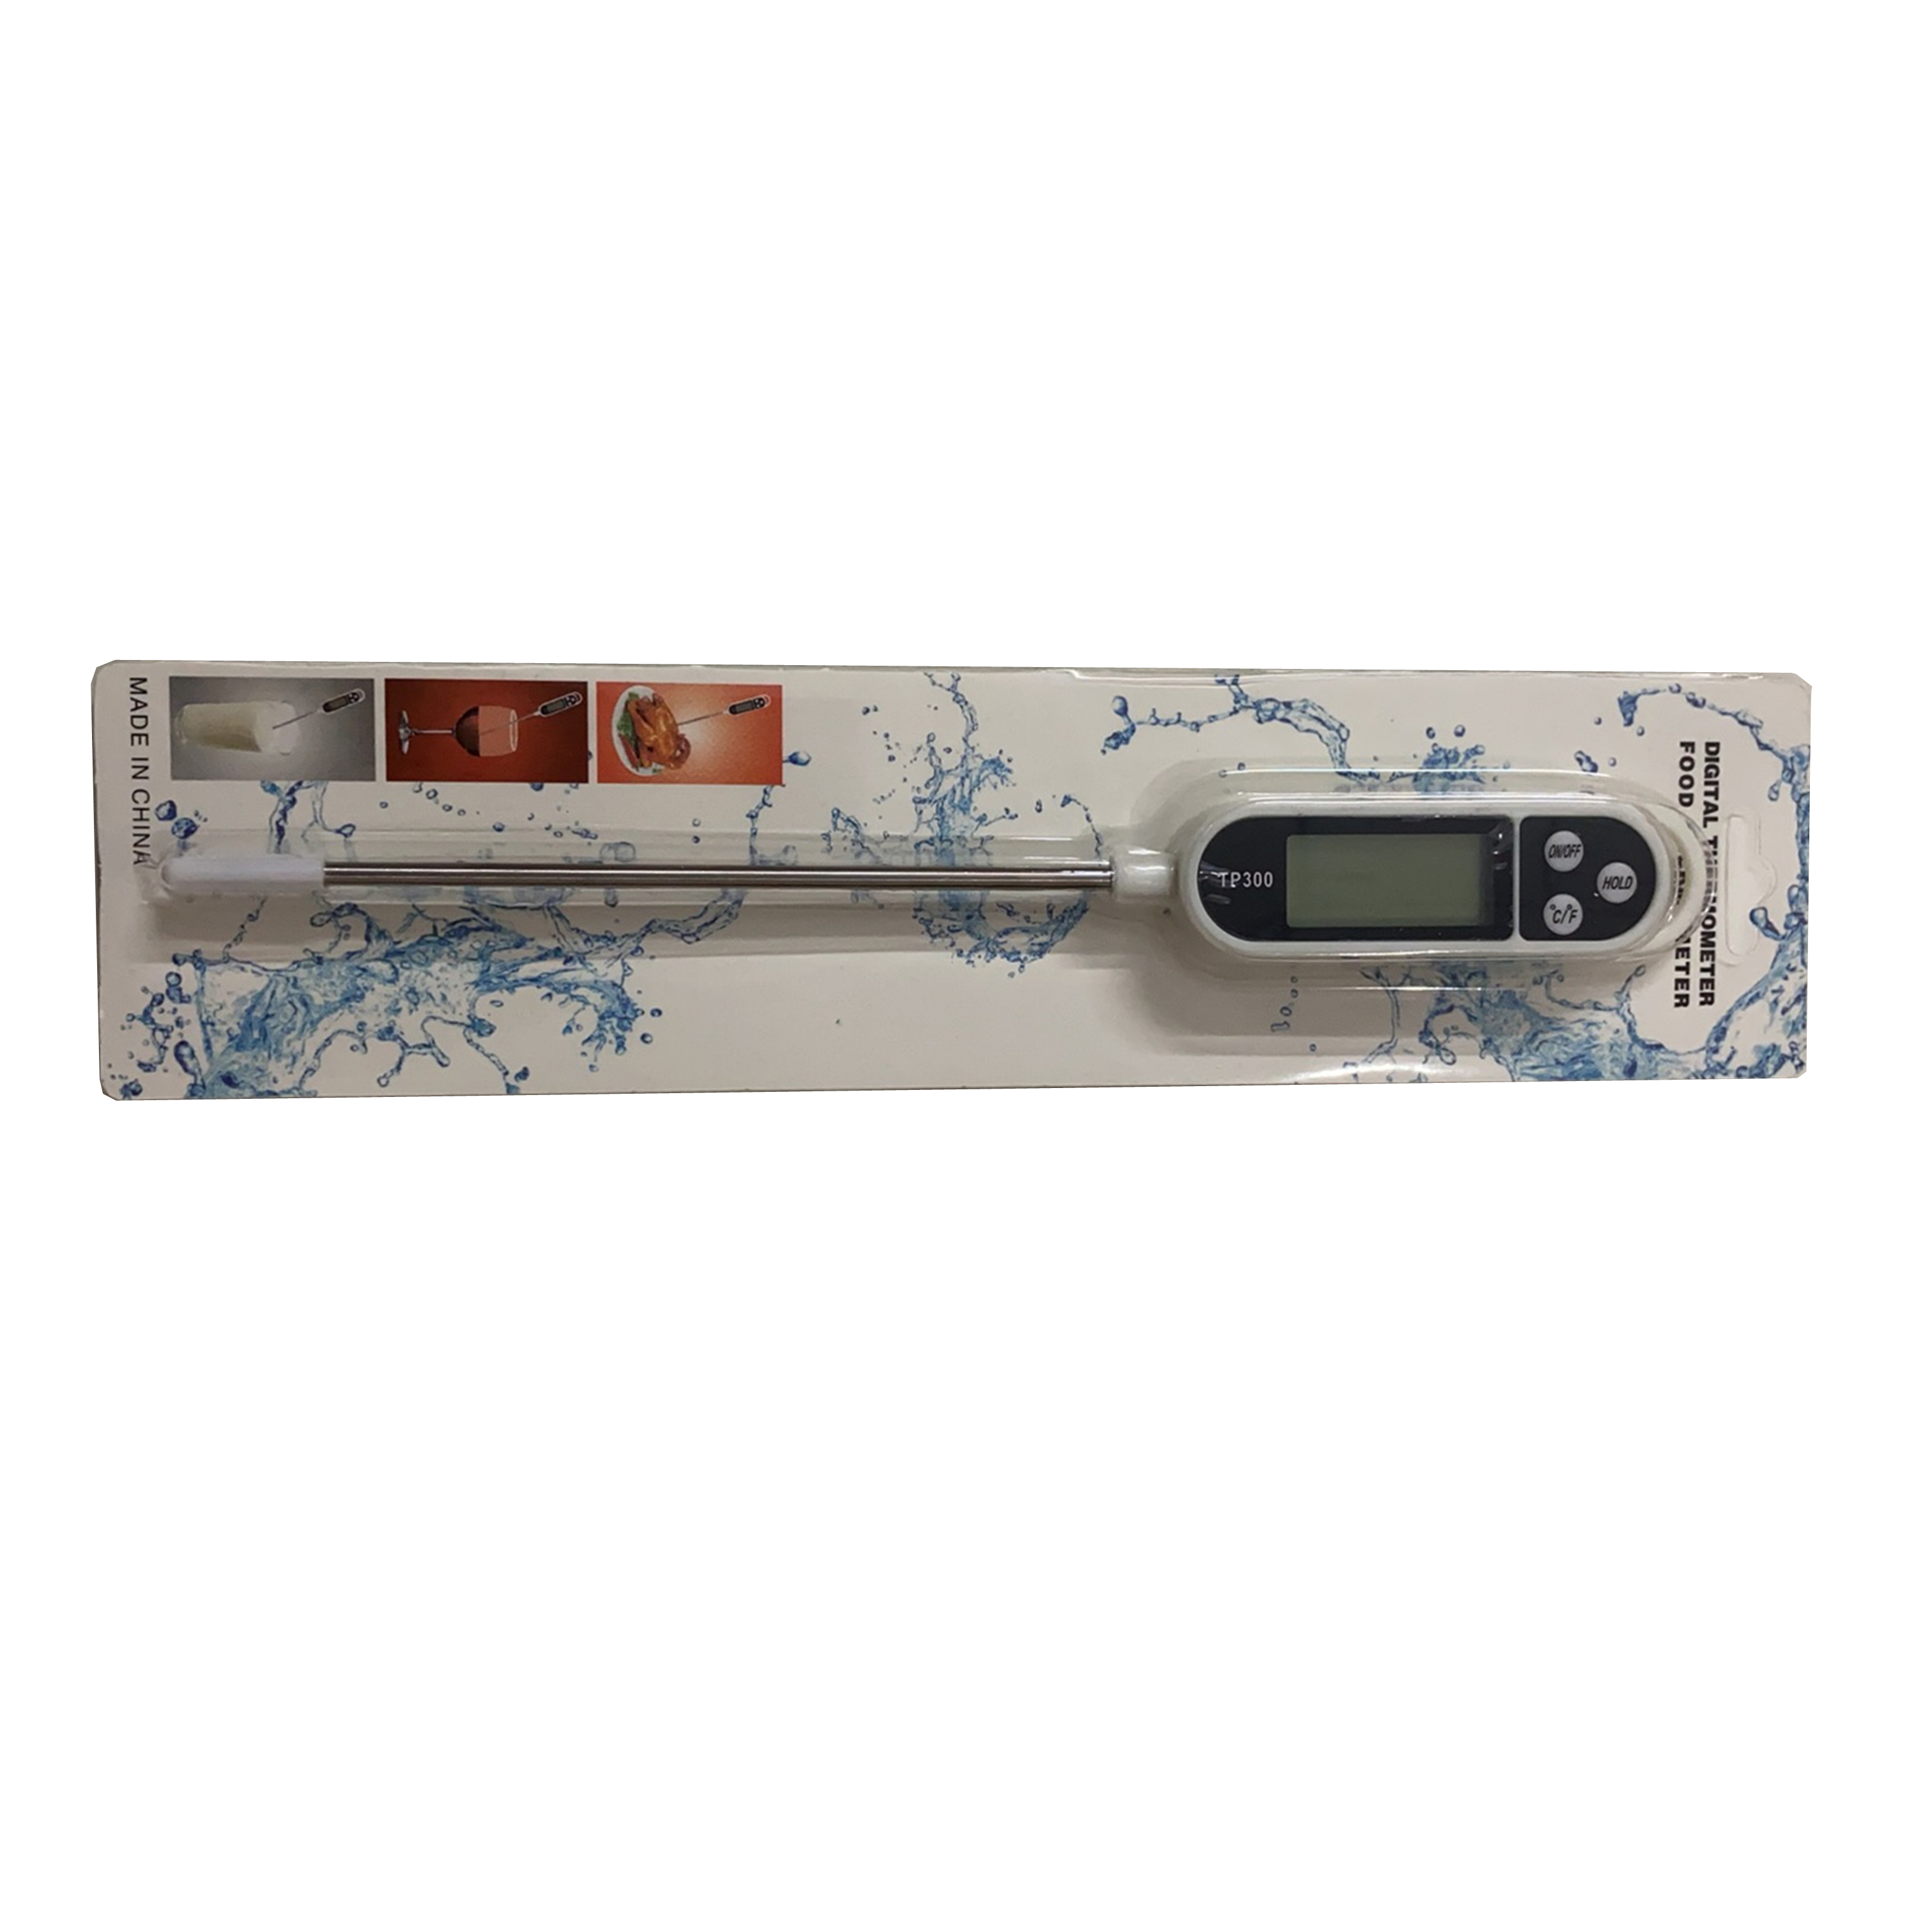 ersatzteil-shop - Digitales Lebensmittel Thermometer